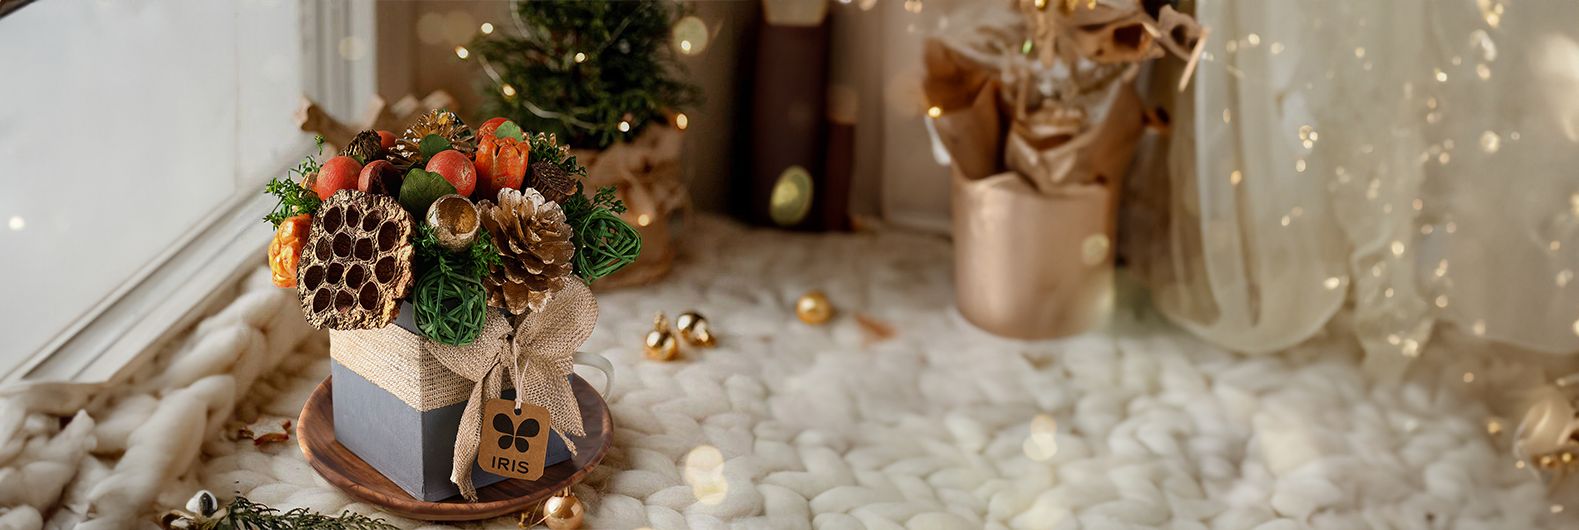 Magic of Christmas with IRIS Home Fragrances